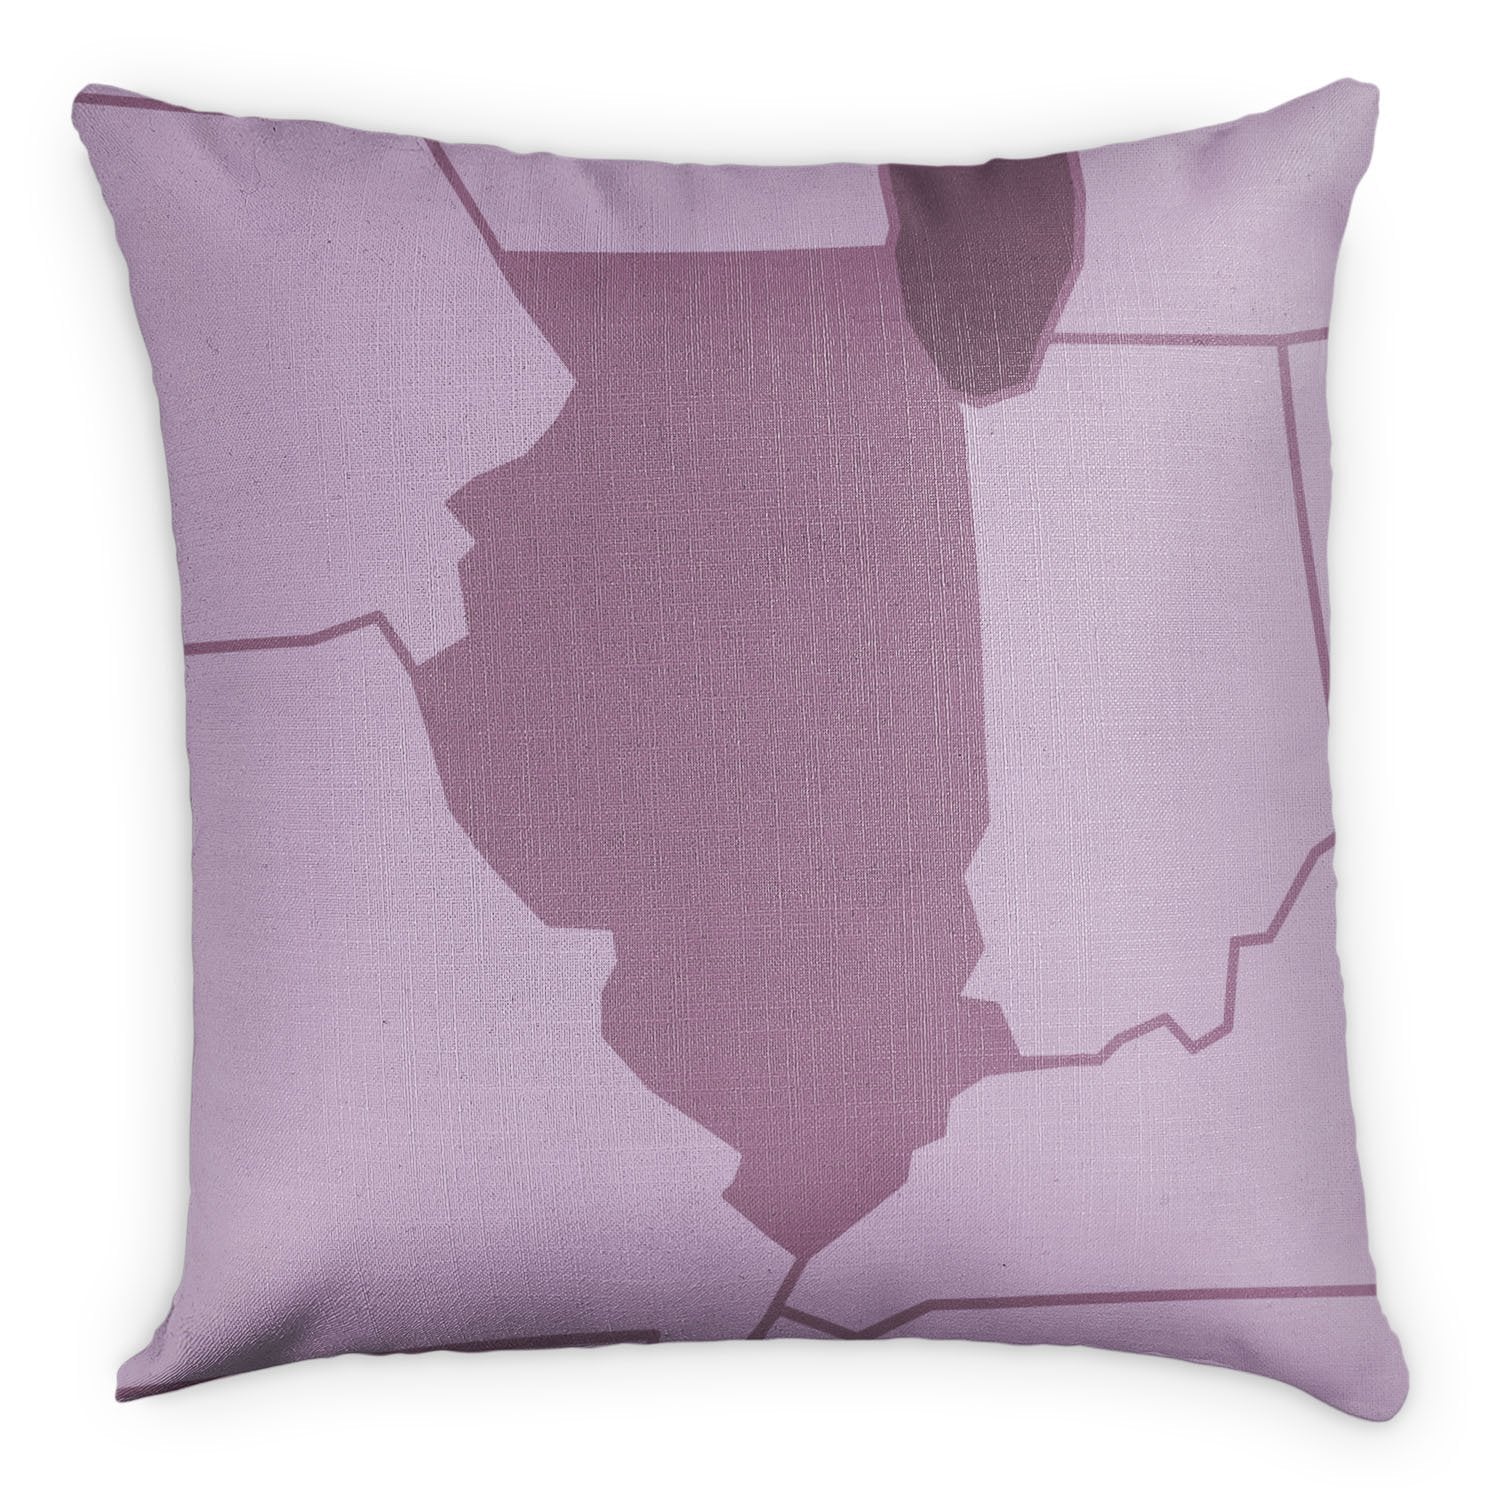 Illinois Square Pillow - Linen -  - Knotty Tie Co.